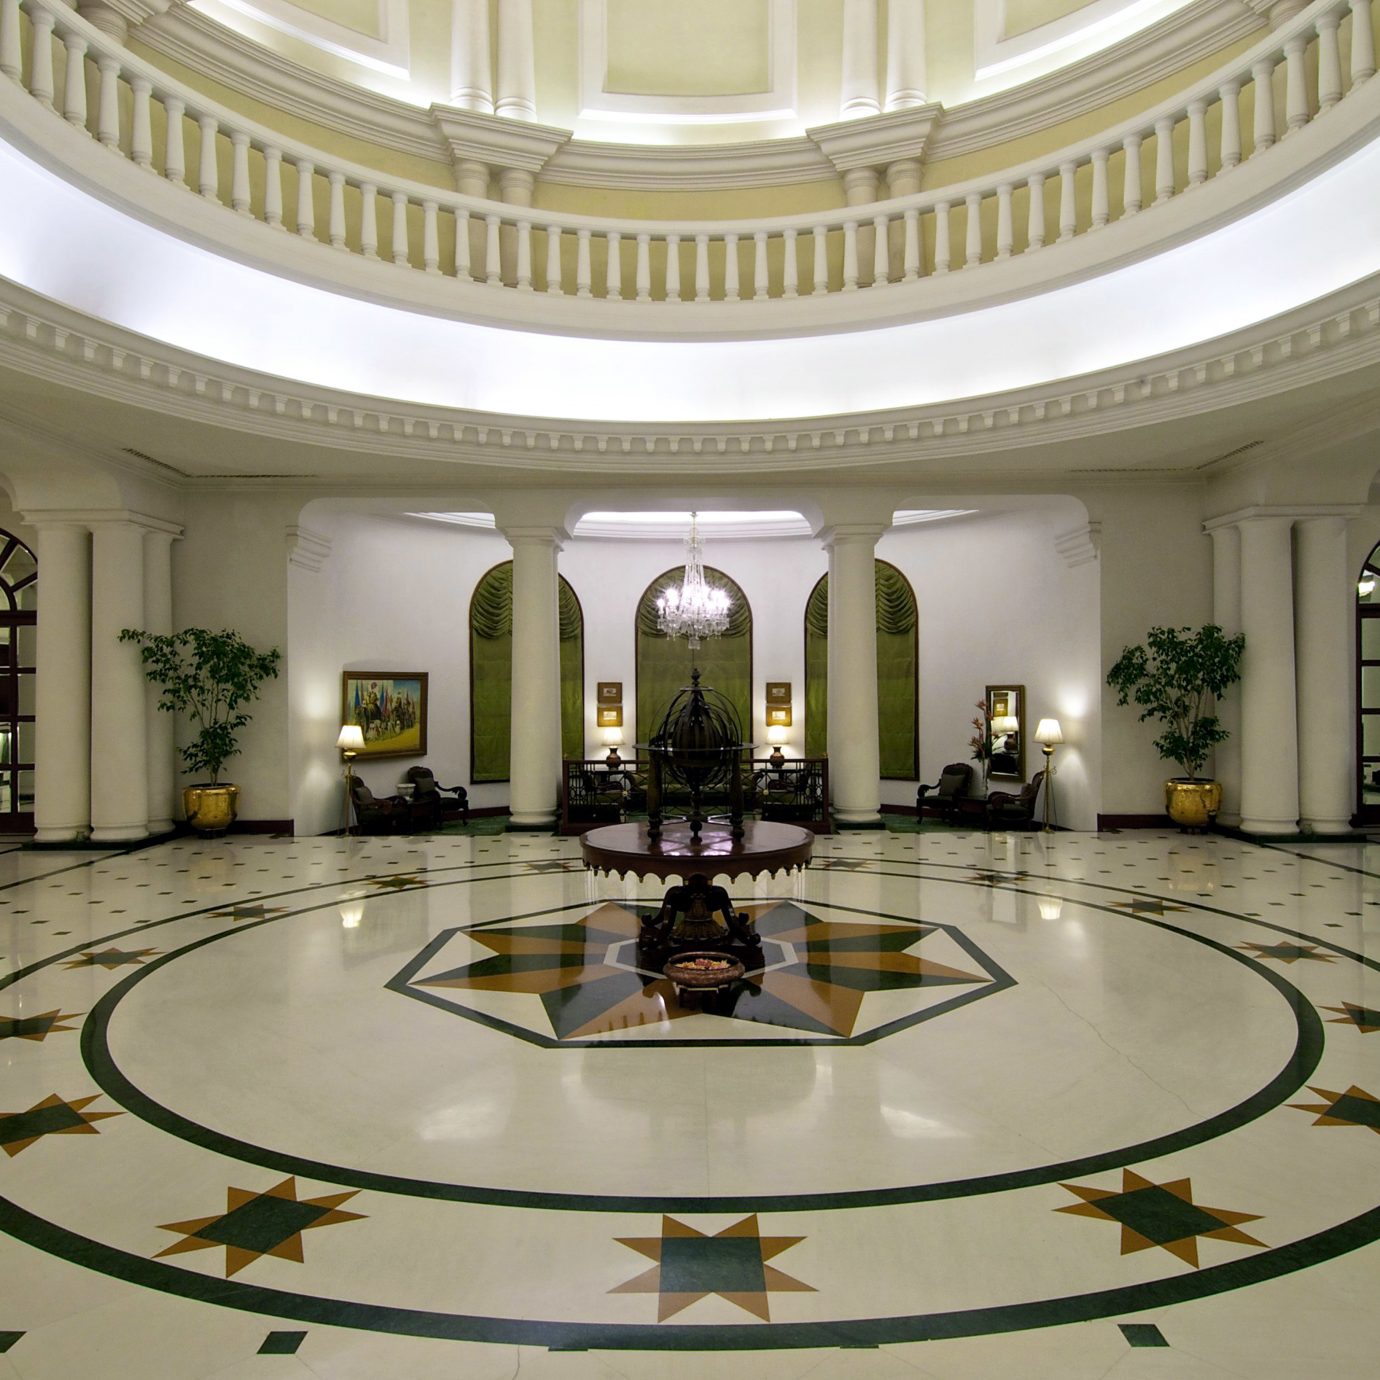 Elegant Lobby Lounge Luxury ballroom mansion palace function hall hall colonnade fancy